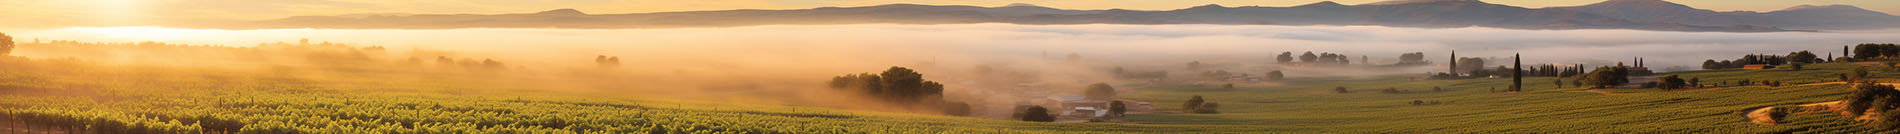 Wine region in Burgenland, Austria